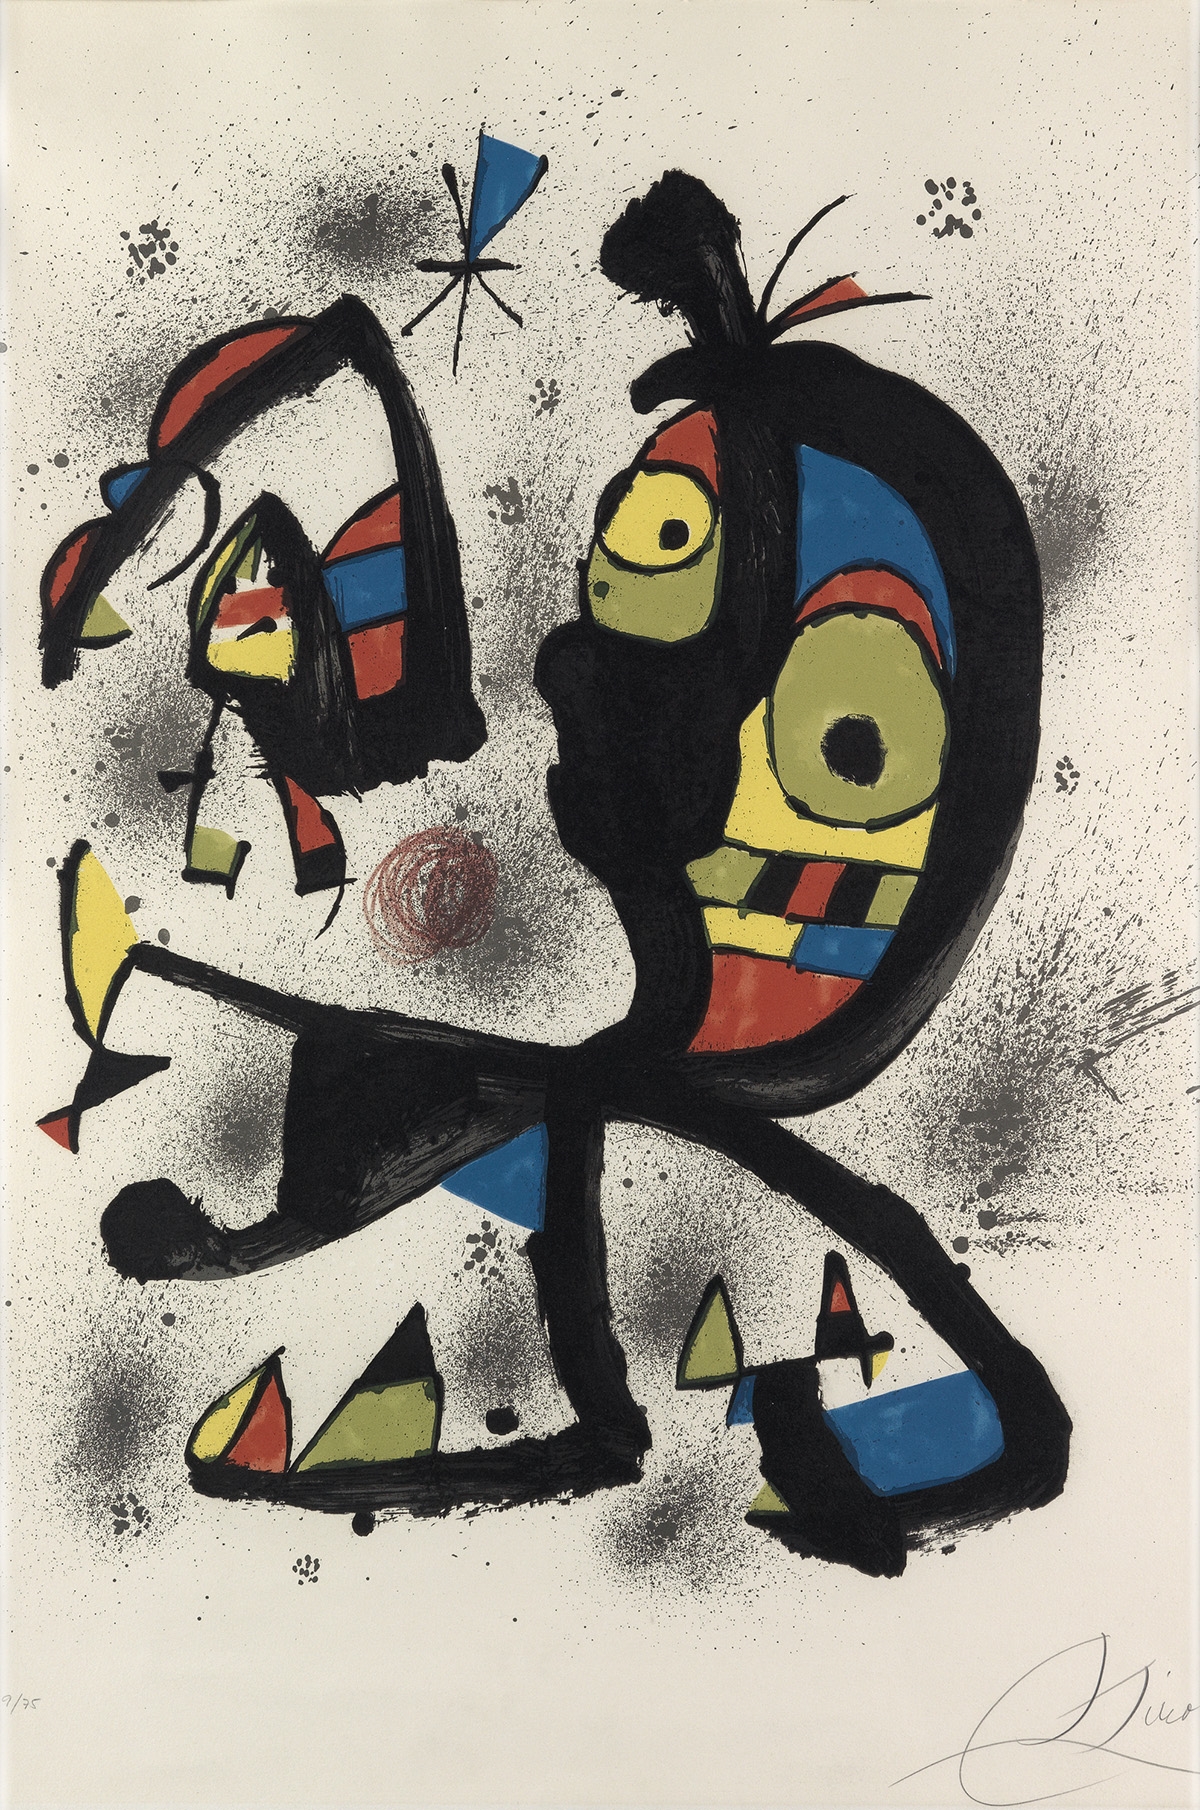 Artwork by Joan Miró, Joan Miró Obra Gràfica, Made of Color lithograph